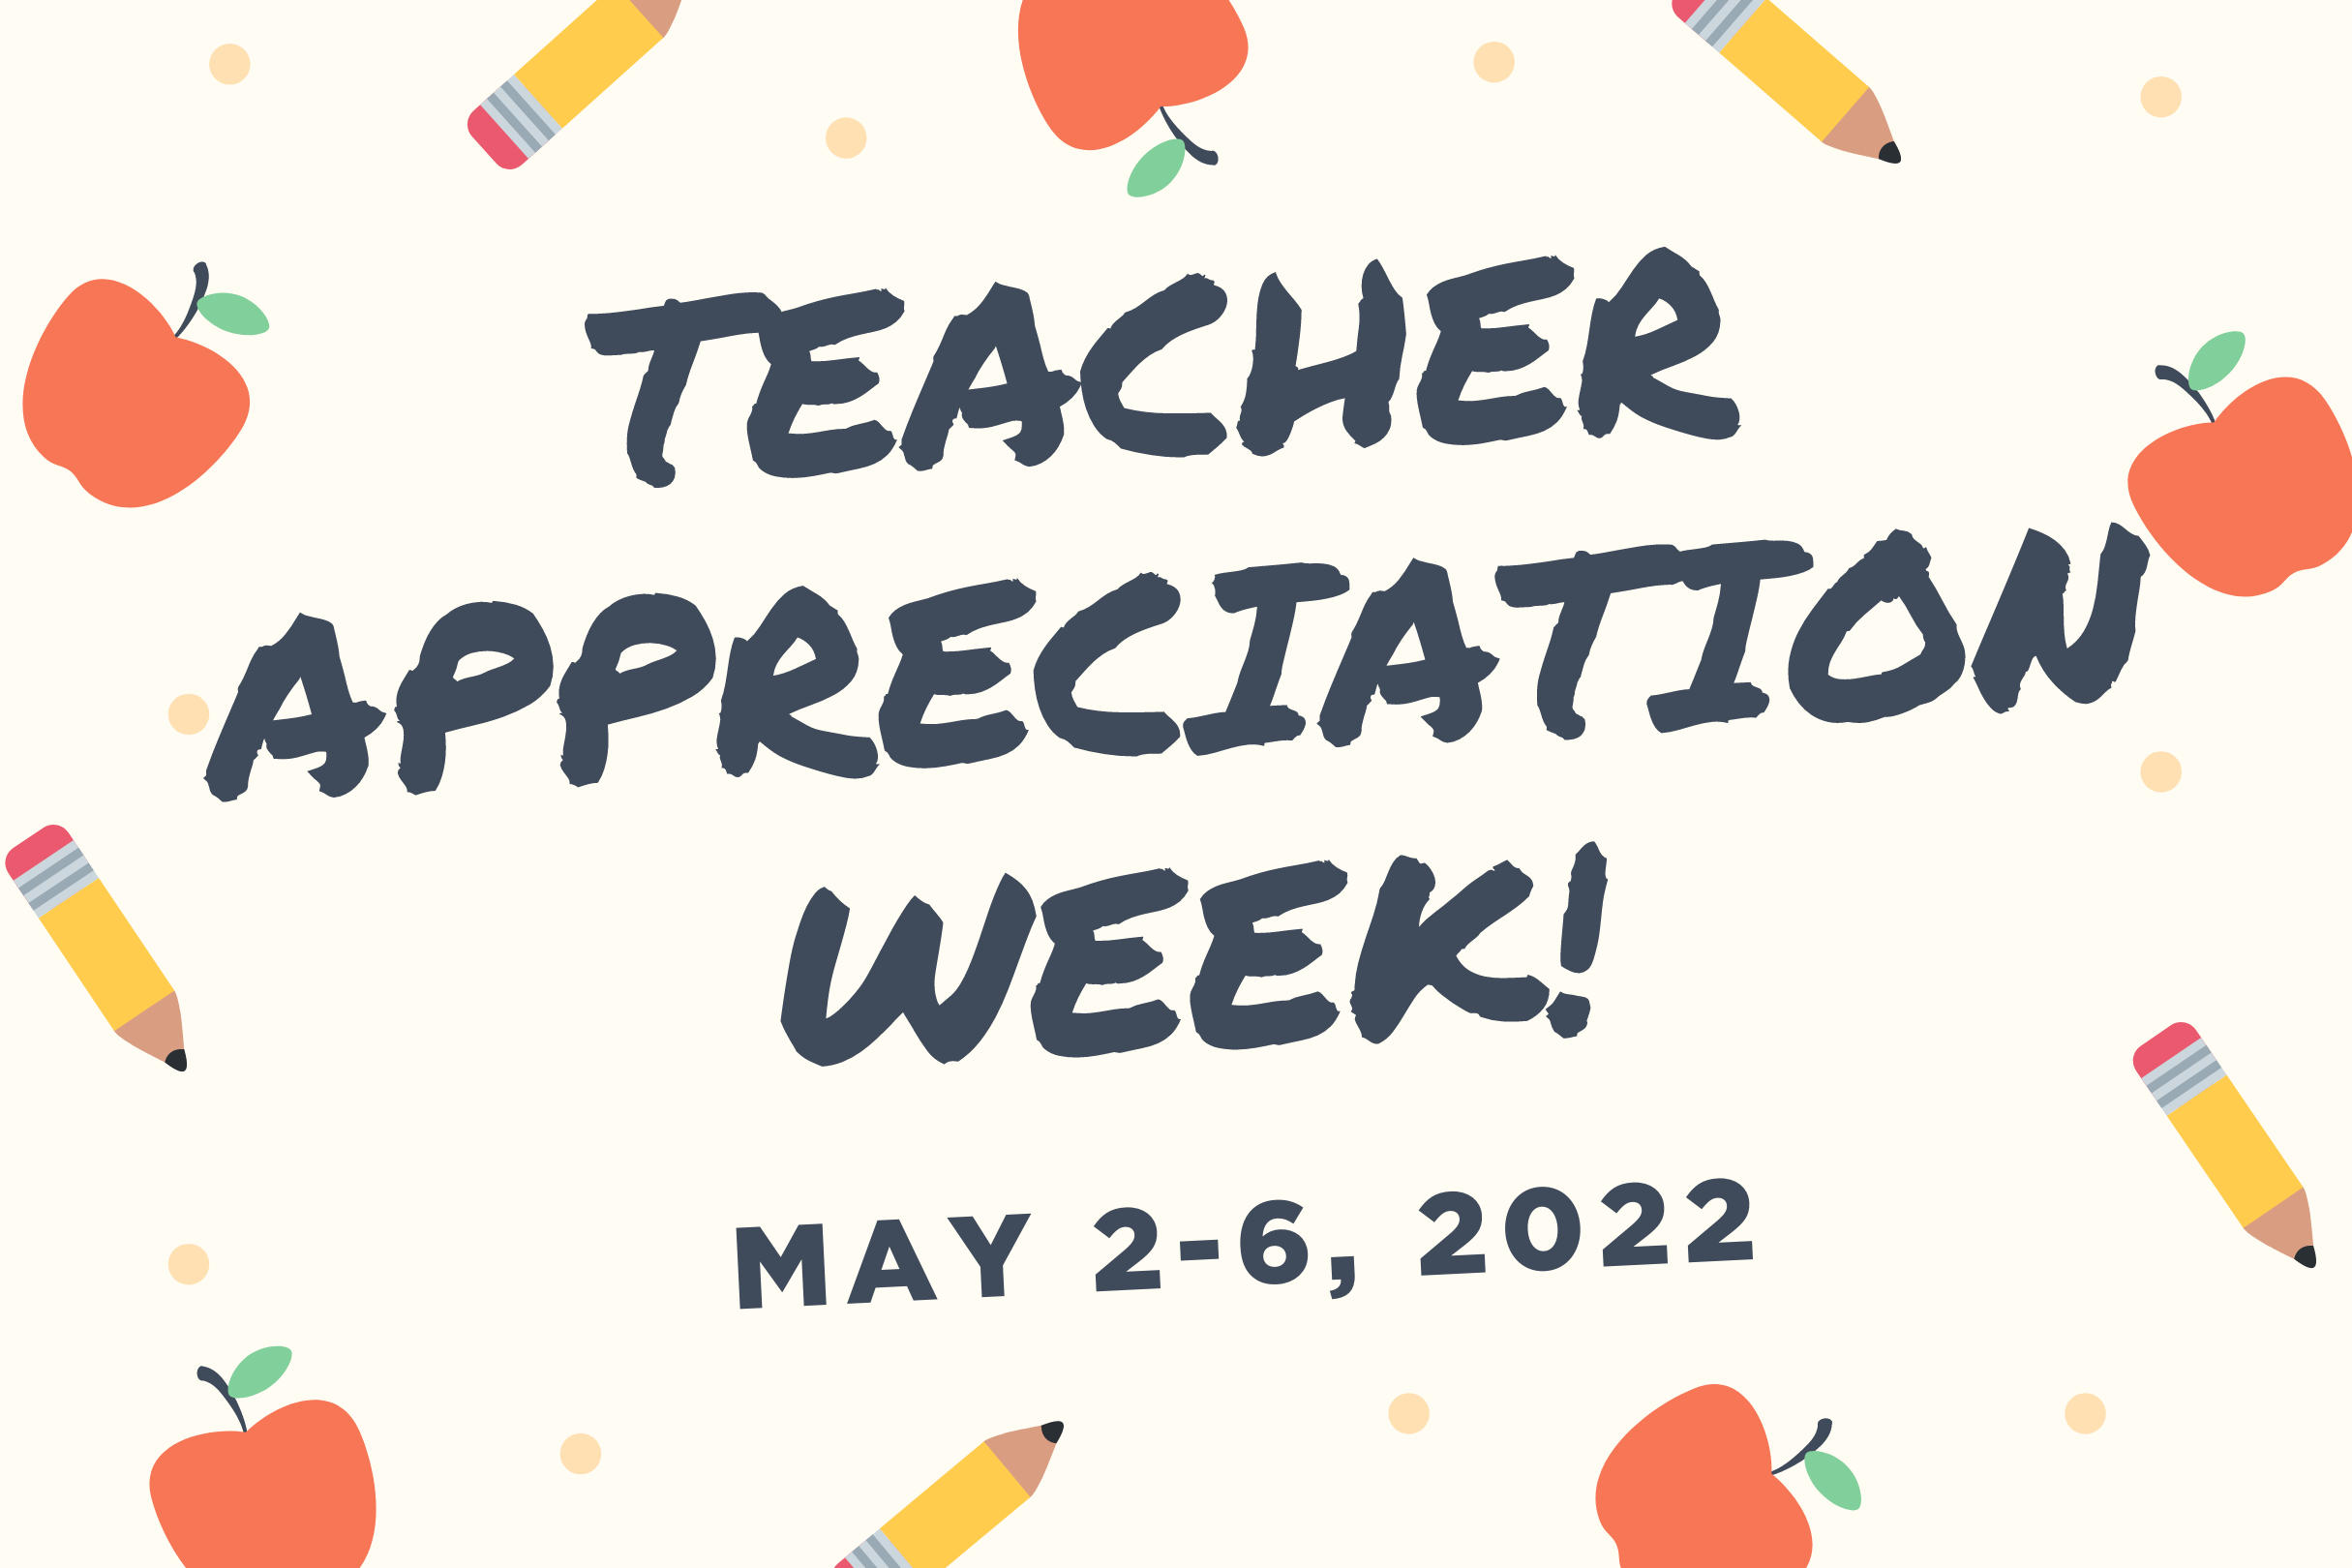 Gift Ideas for Teacher Appreciation Week (May 2-6) • TechNotes Blog